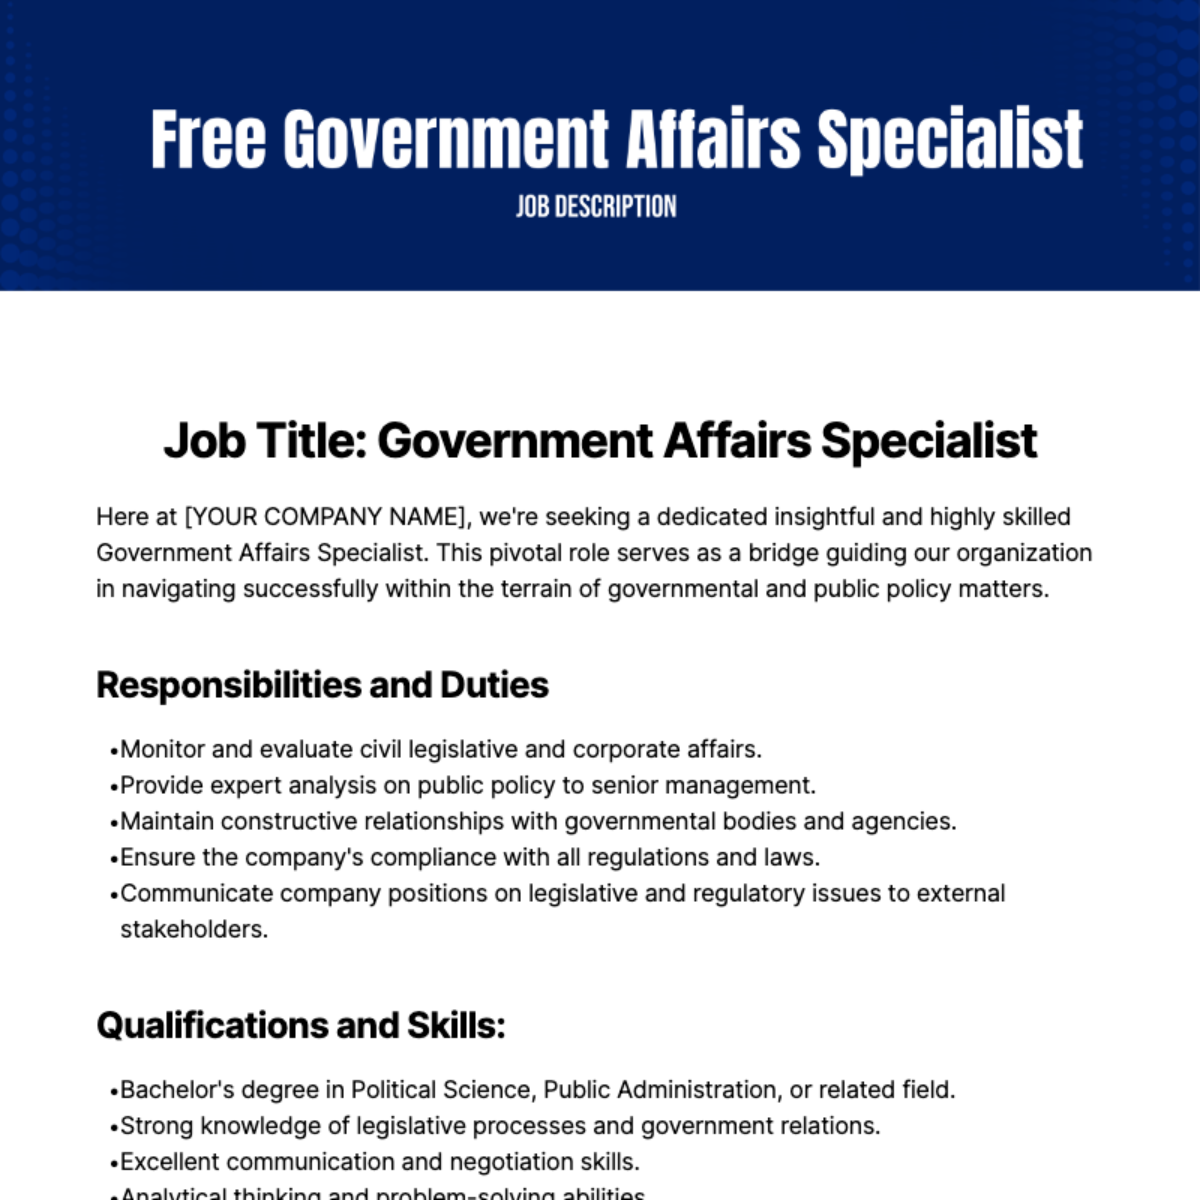 Free Government Affairs Specialist Job Description Template